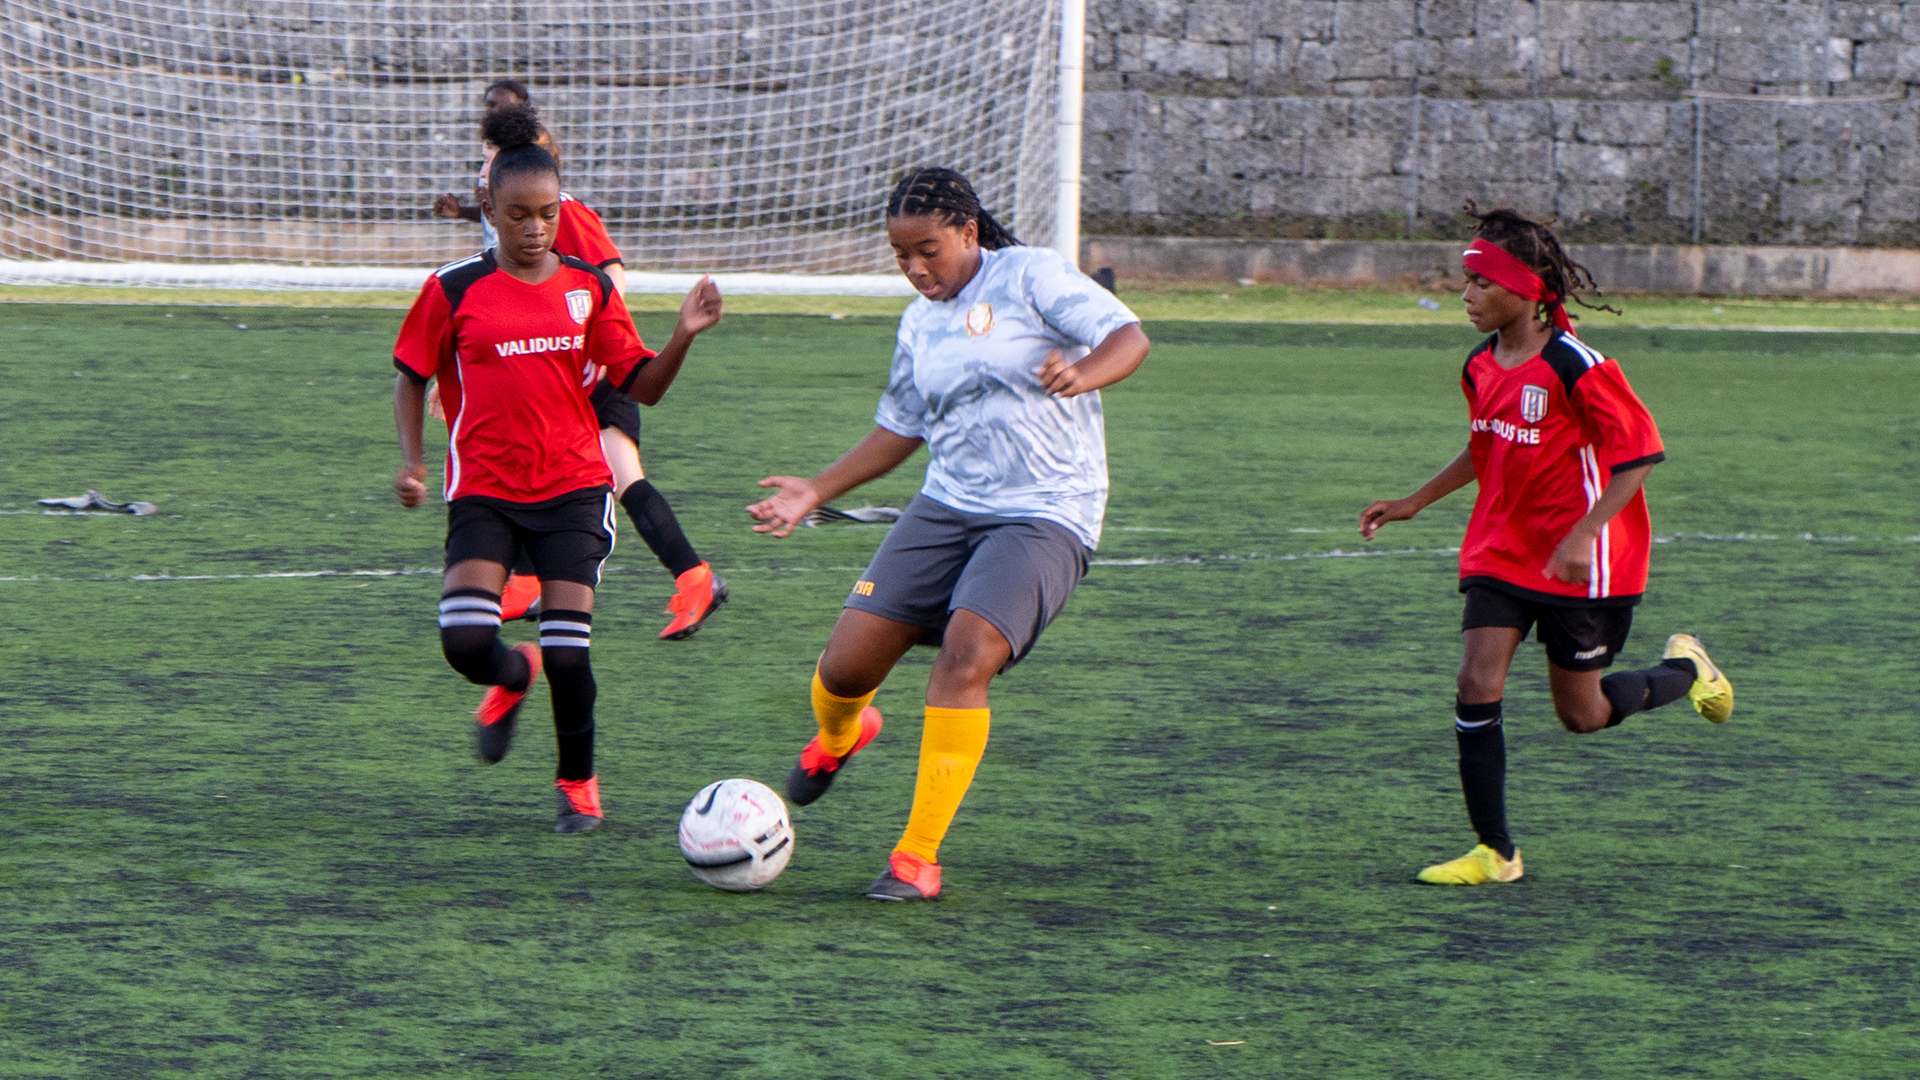 Girls Under-14 League being developed by TTFA